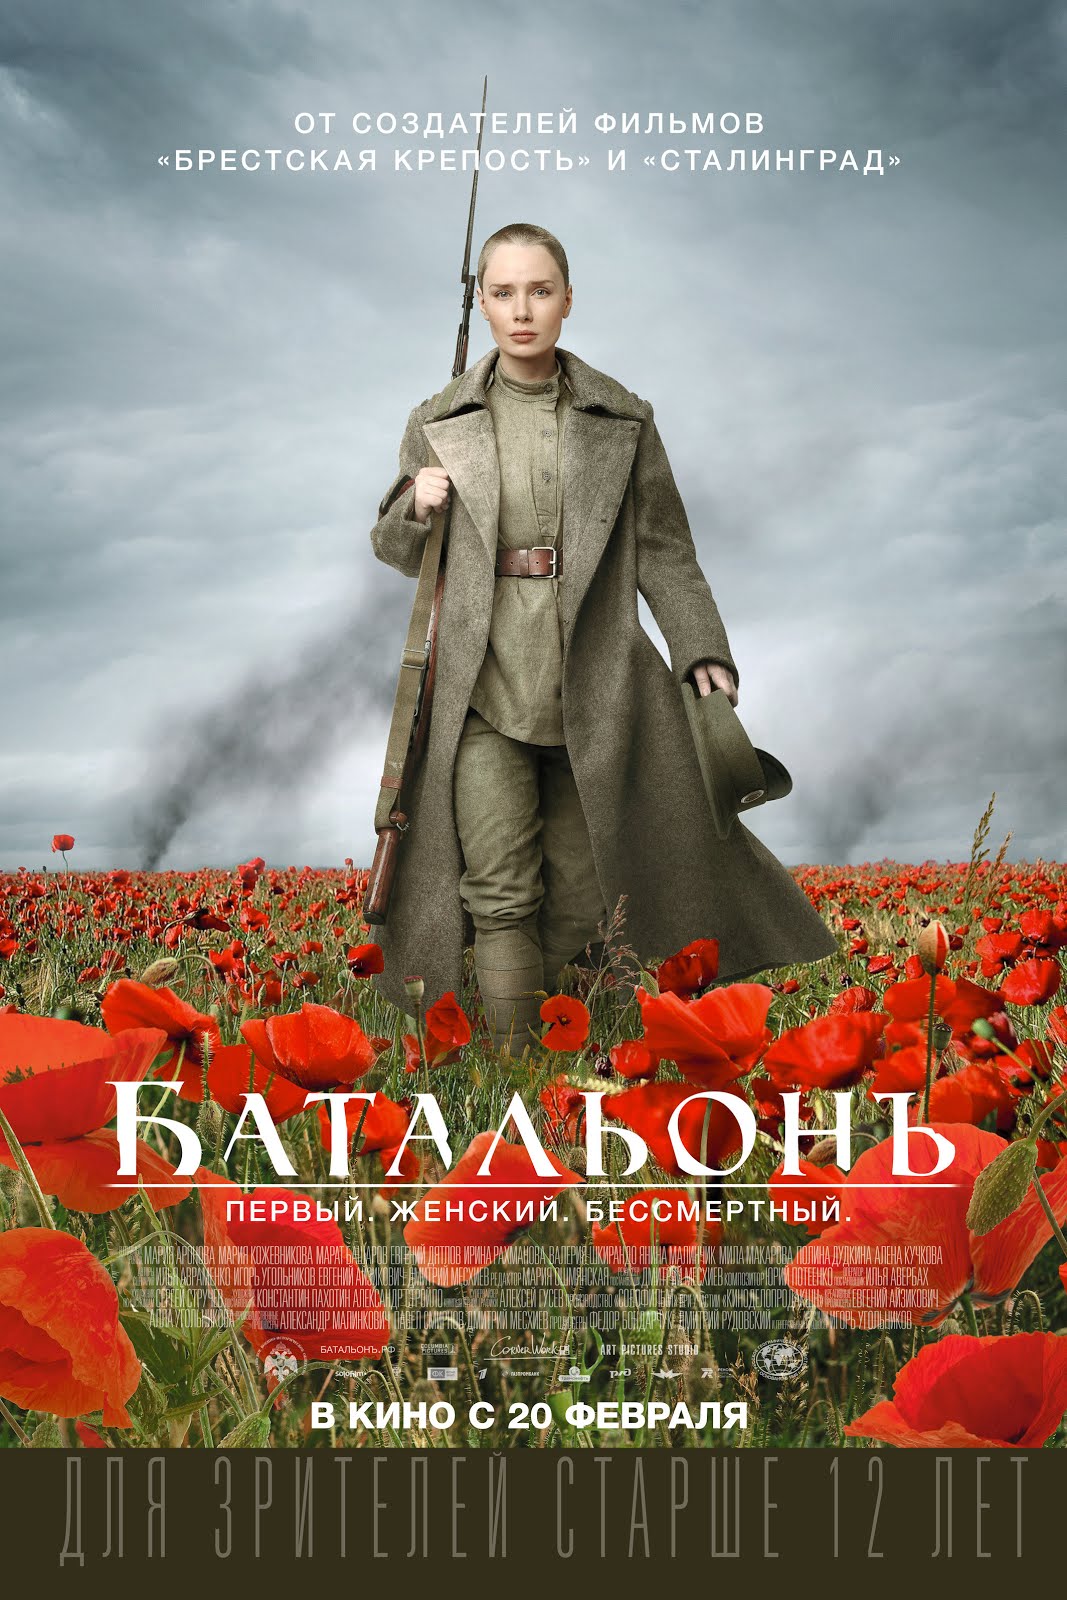 3. Battalion - theatrical poster